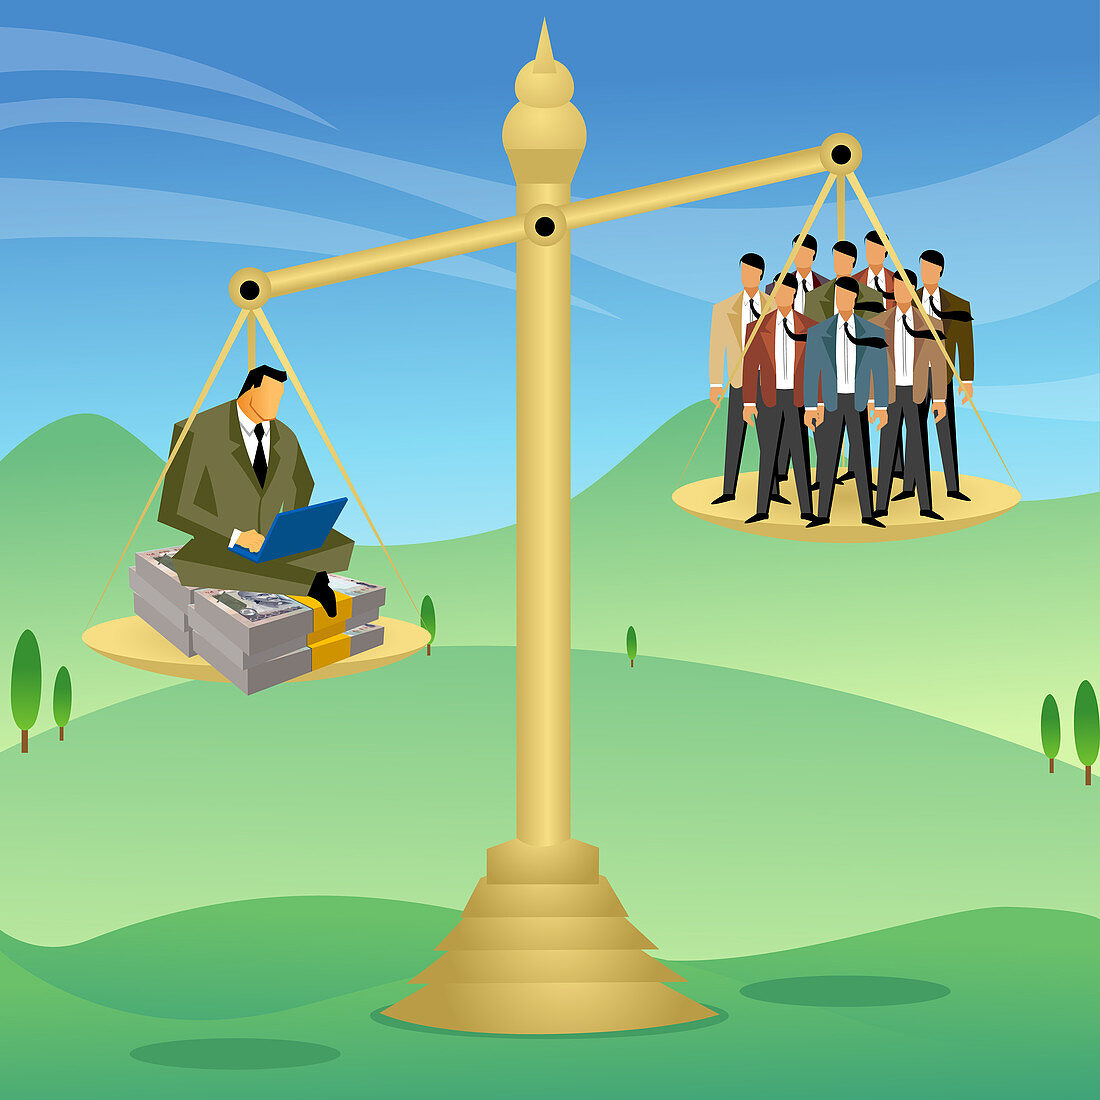 Businessmen on the pans of a balance, illustration